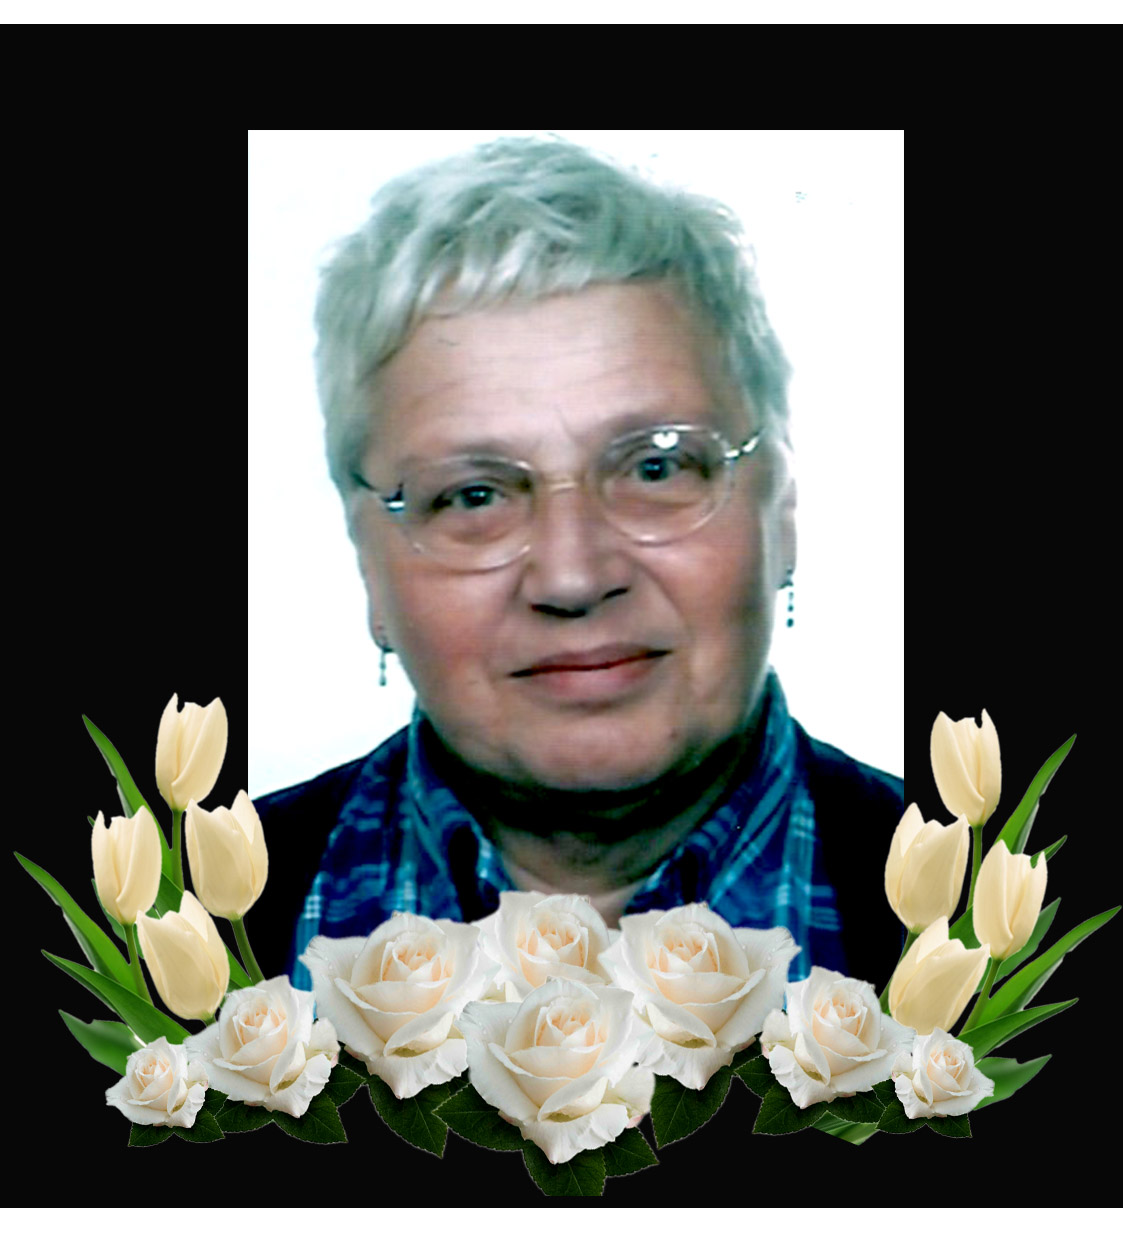 Op 12-02-2018 our first Chairman of the Foundation of Dr. Reijntjes School for the Deaf in Sri Lanka, Mrs. Barbel Kattenbelt, passed away.